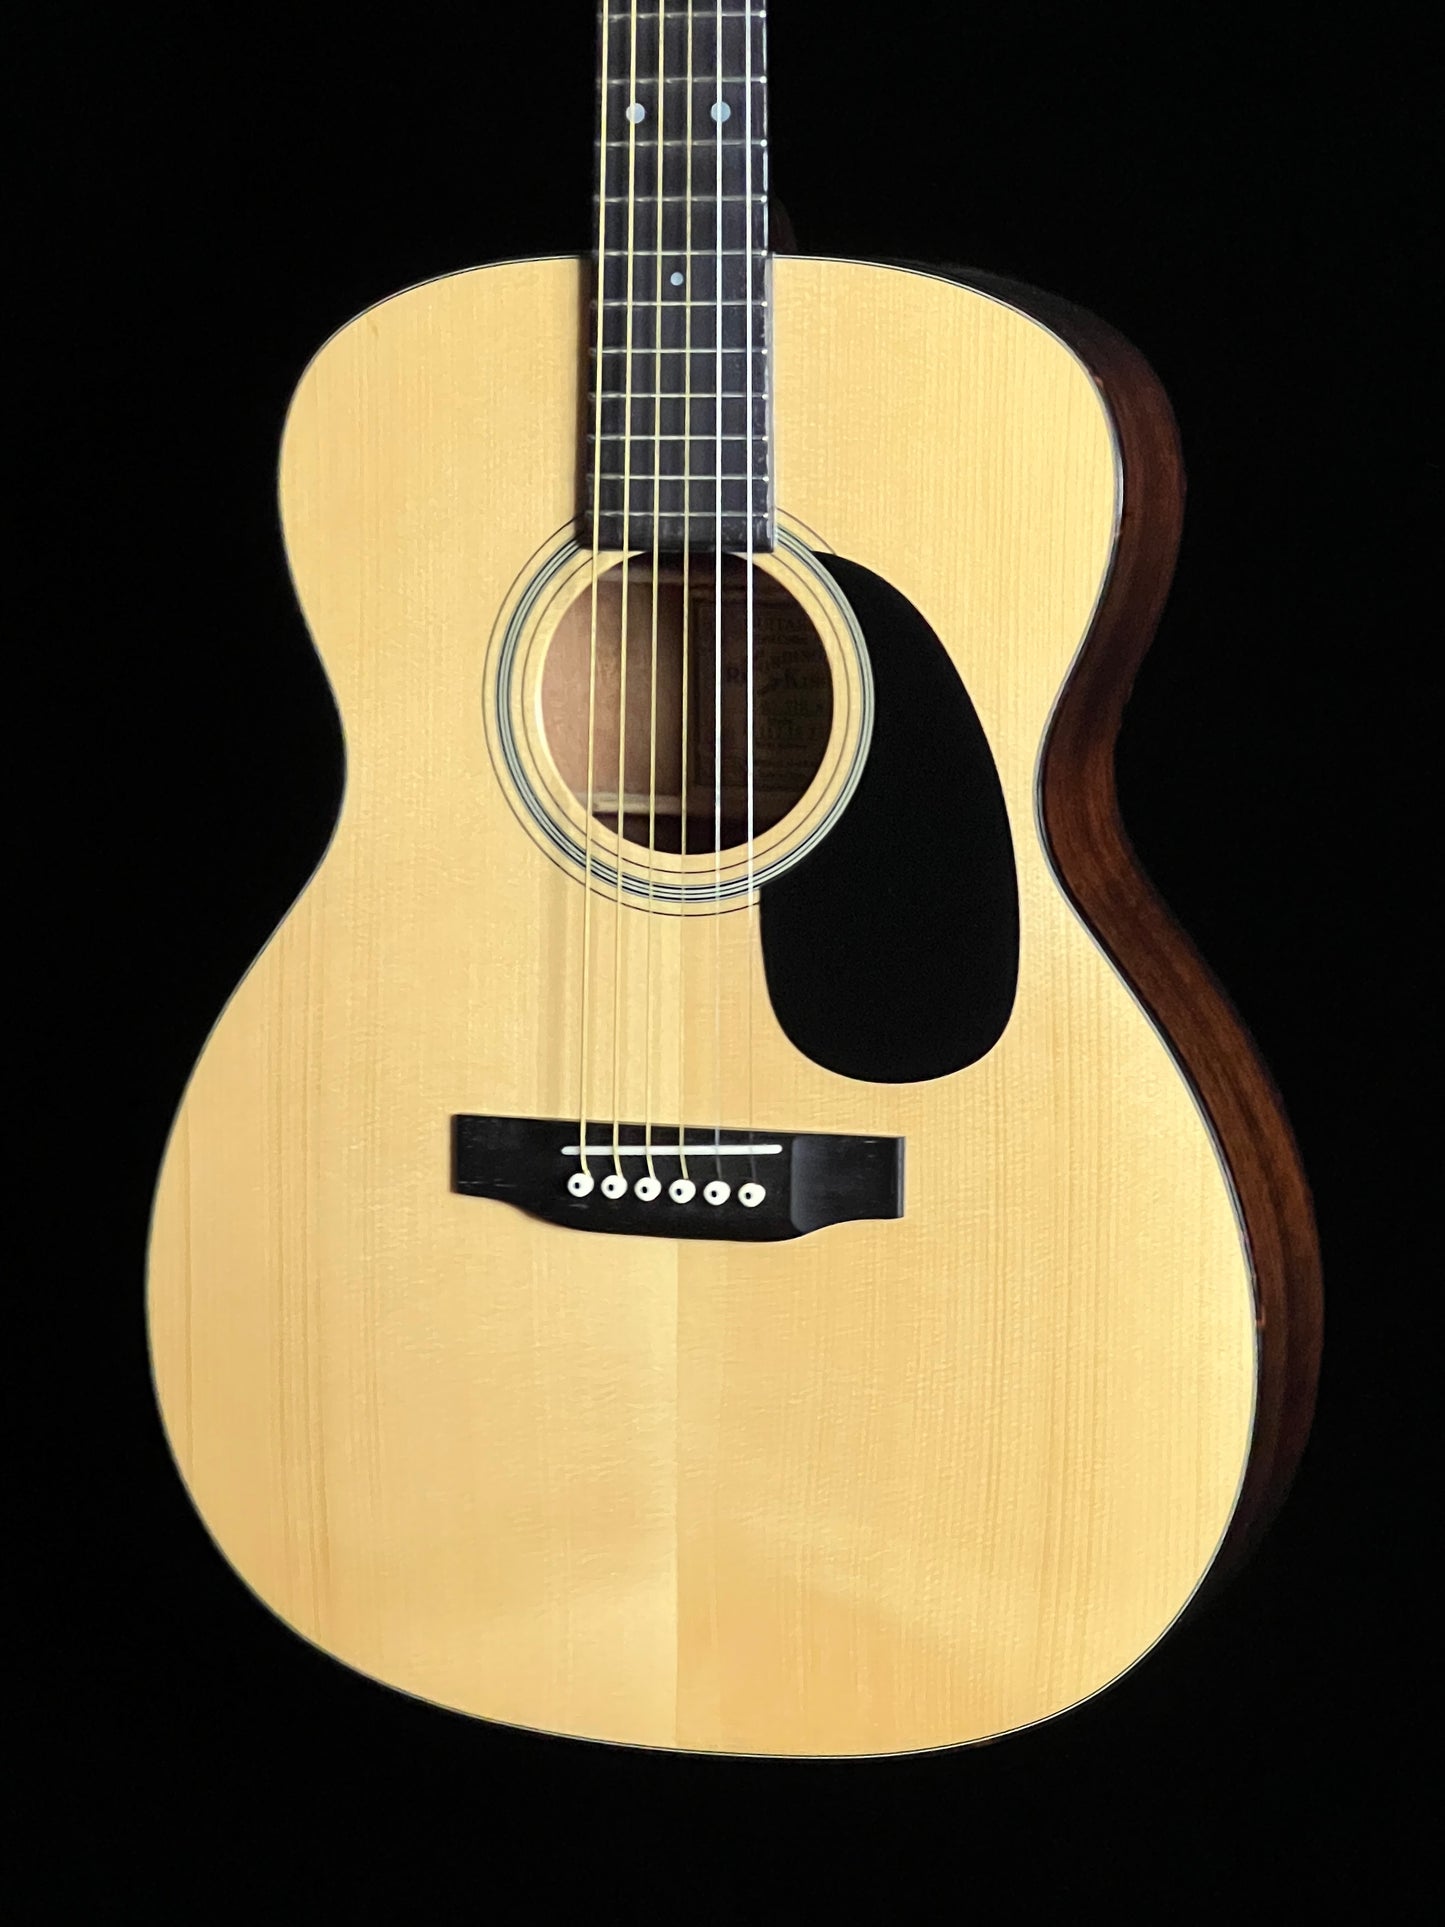 SOLD - Recording King RO-318 000 Acoustic Guitar Adirondack Spruce/Mahogany - Used